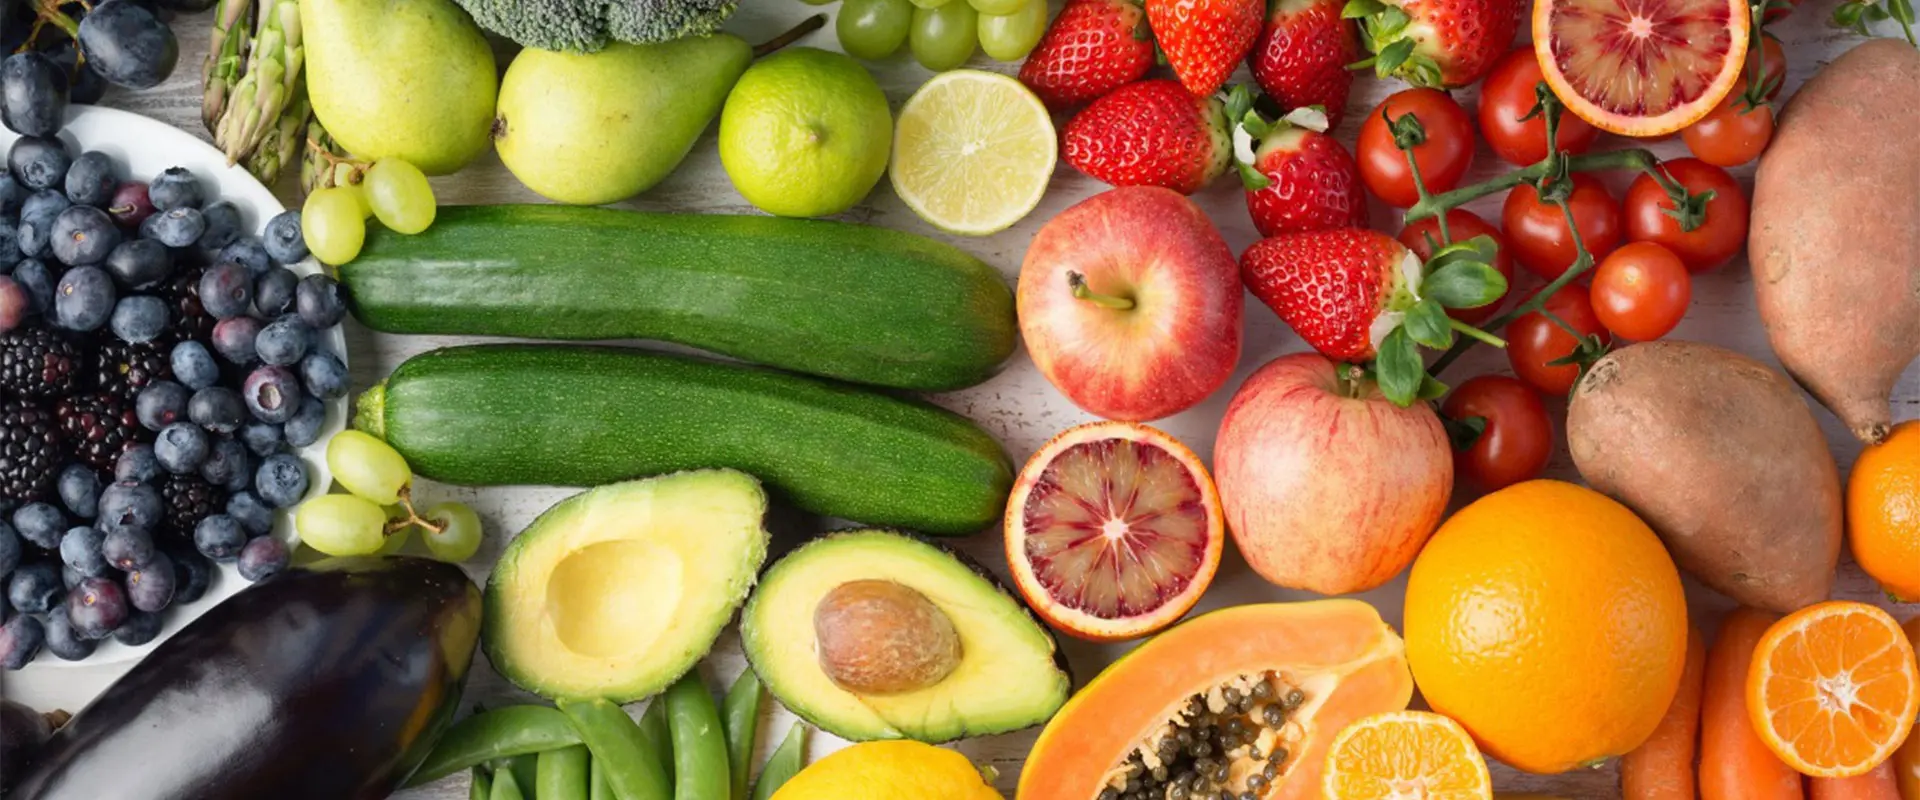 Polvere di frutta e verdura biologica